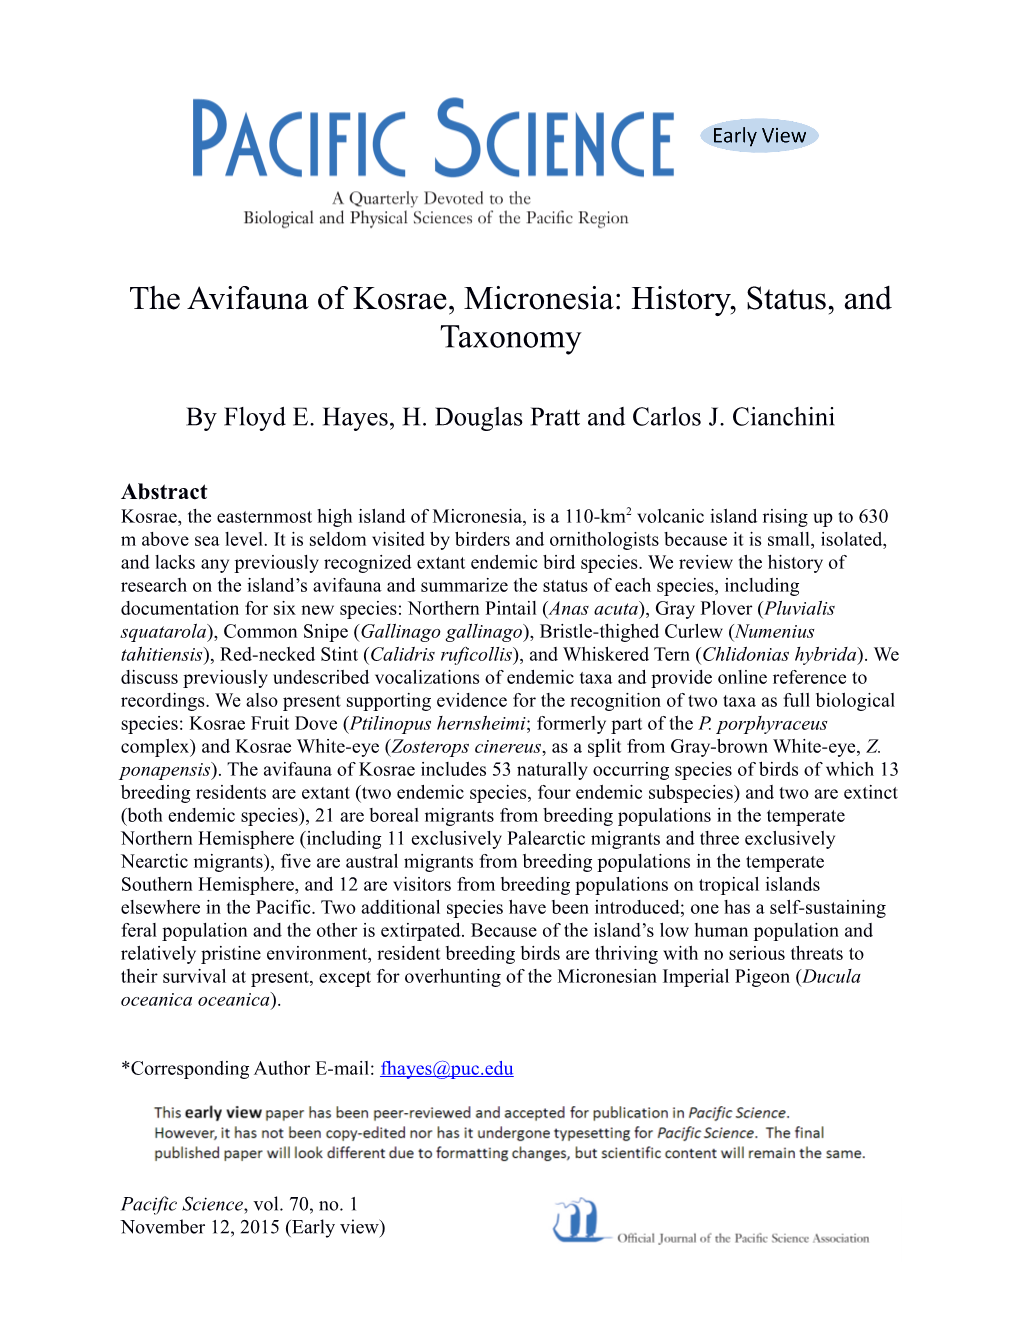 The Avifauna of Kosrae, Micronesia: History, Status, and Taxonomy